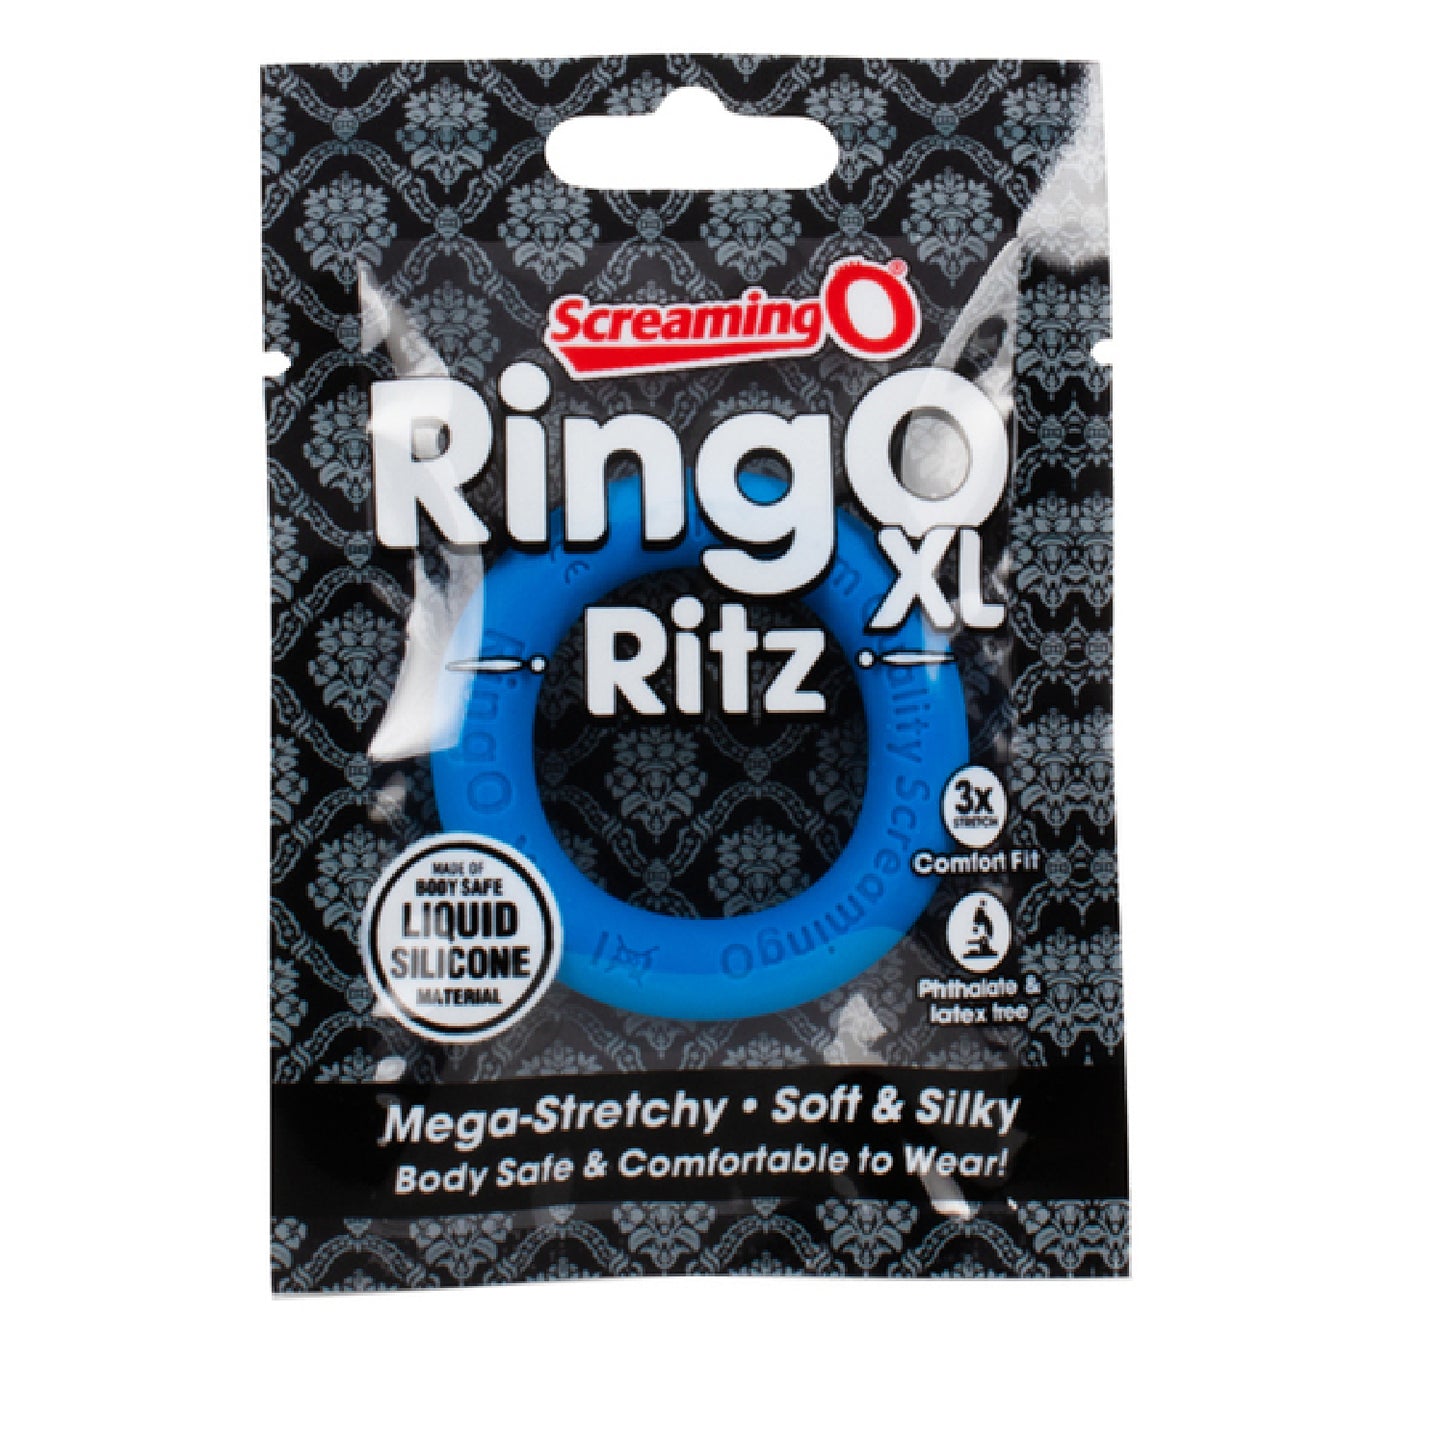 RingO Ritz XL - One Stop Adult Shop